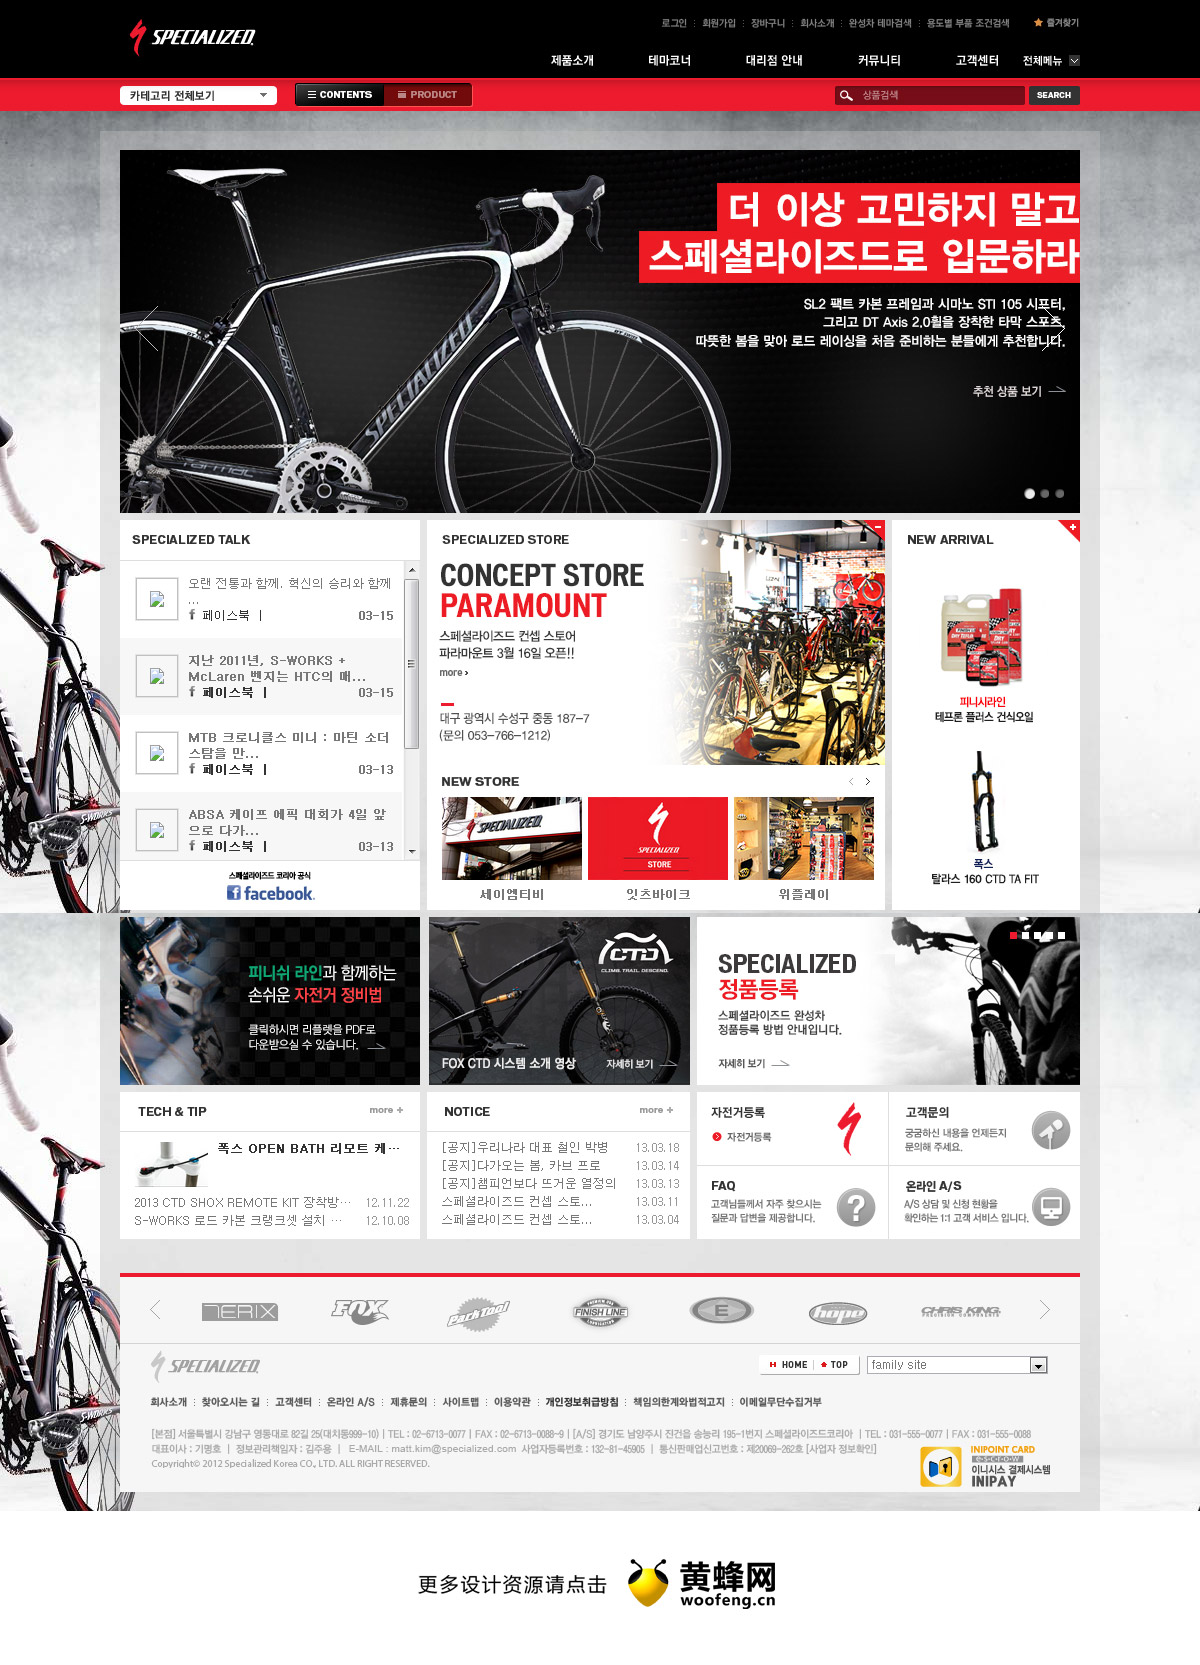 SPECIALIZED自行车网站，来源自黄蜂网https://woofeng.cn/web/